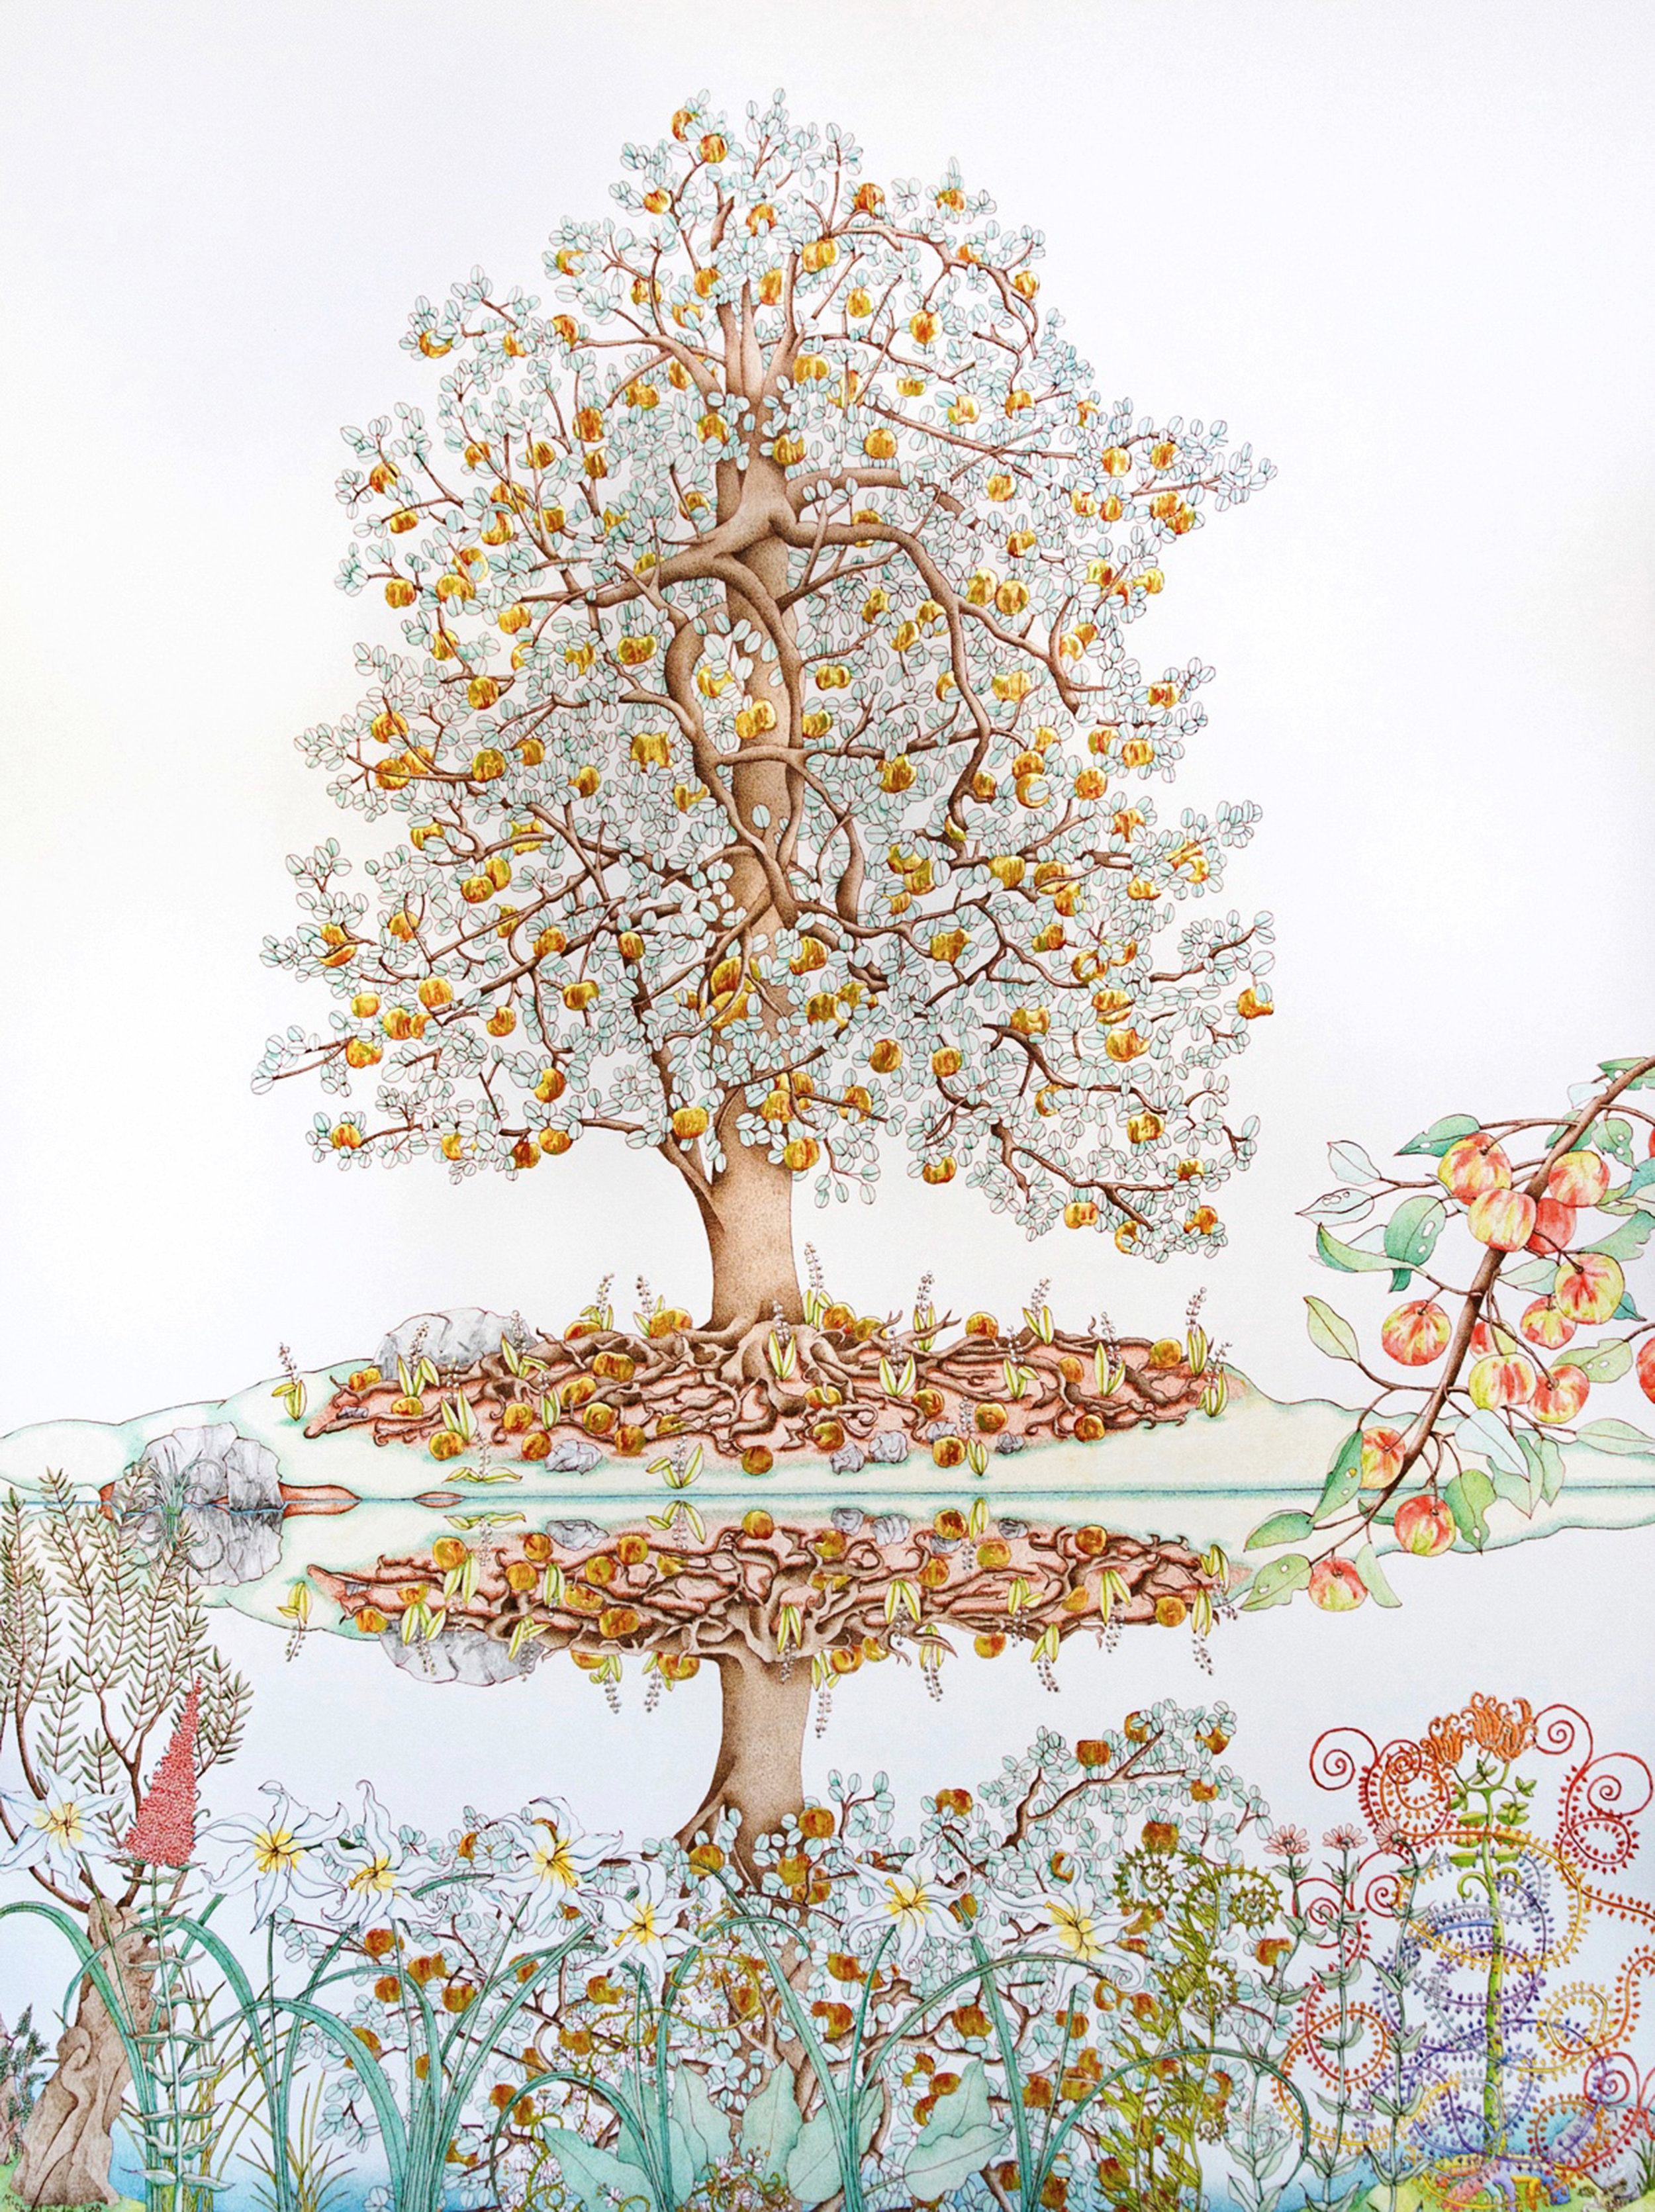  Michael Eade,  Tree of Life Reflected , 2018. Egg tempera, raised 22k gold leaf, raised aluminum leaf, oil on canvas, 48 x 36 inches ©Michael Eade, courtesy Fou Gallery 